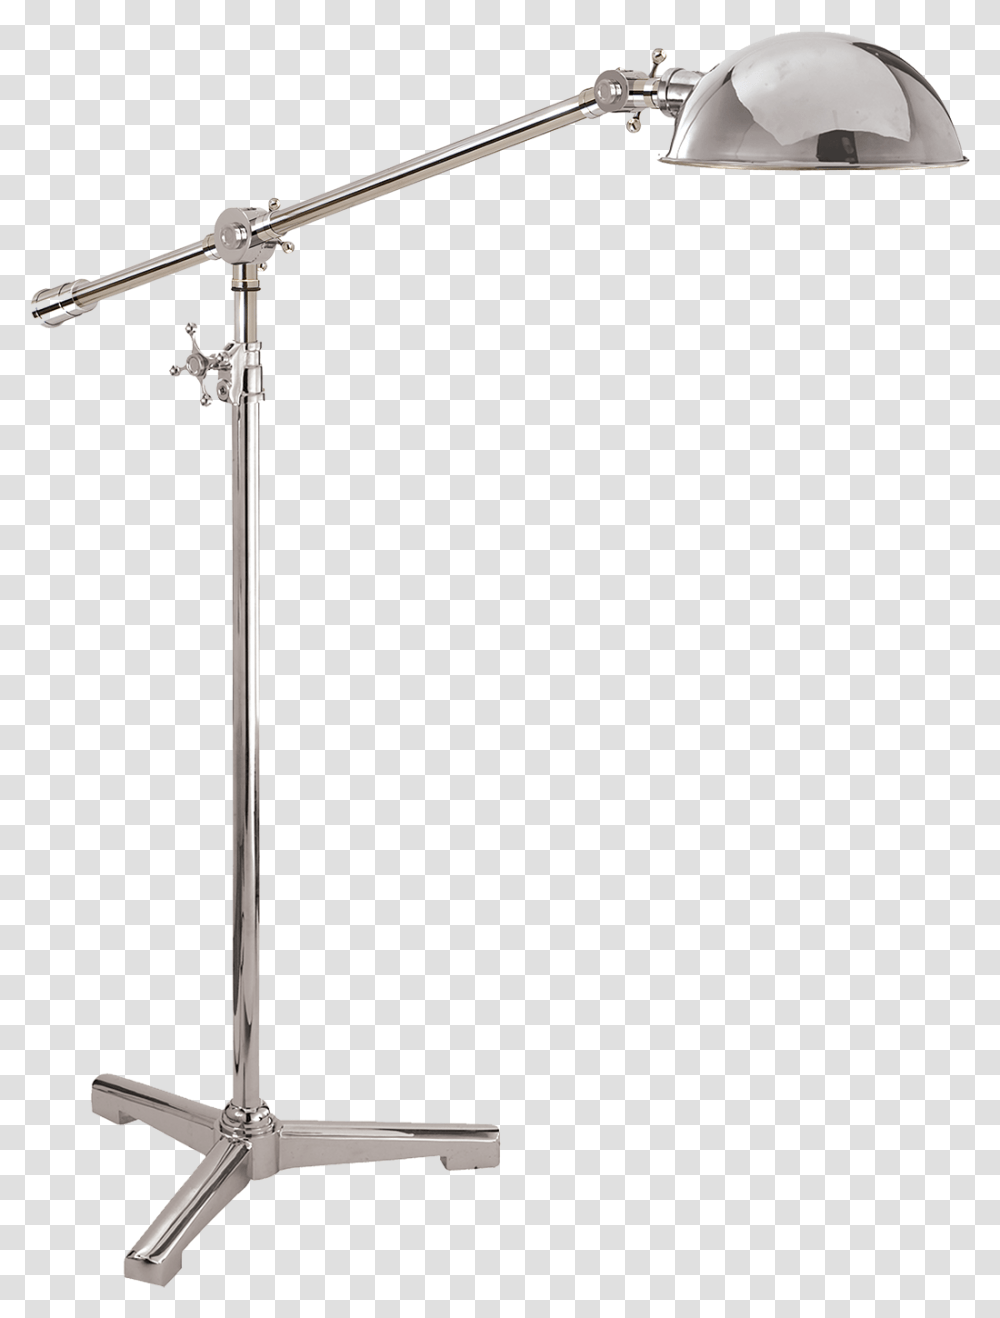 Lamp, Lighting, Utility Pole, Table Lamp, Patio Umbrella Transparent Png